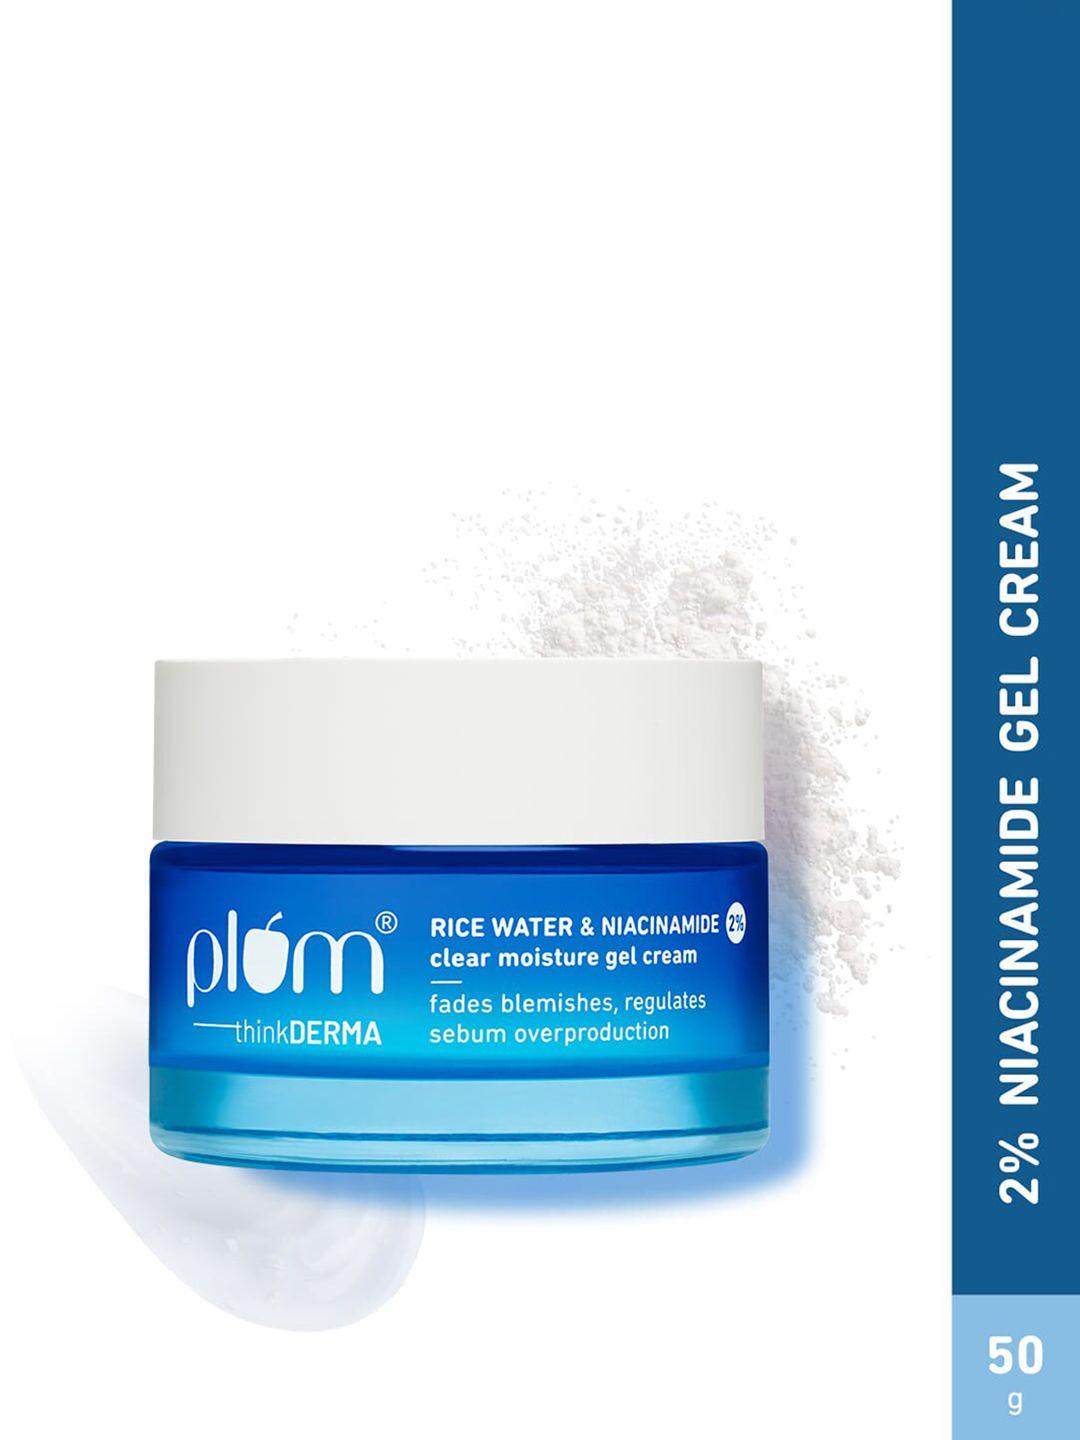 plum rice water & niacinamide clear moisture gel cream - 50 g